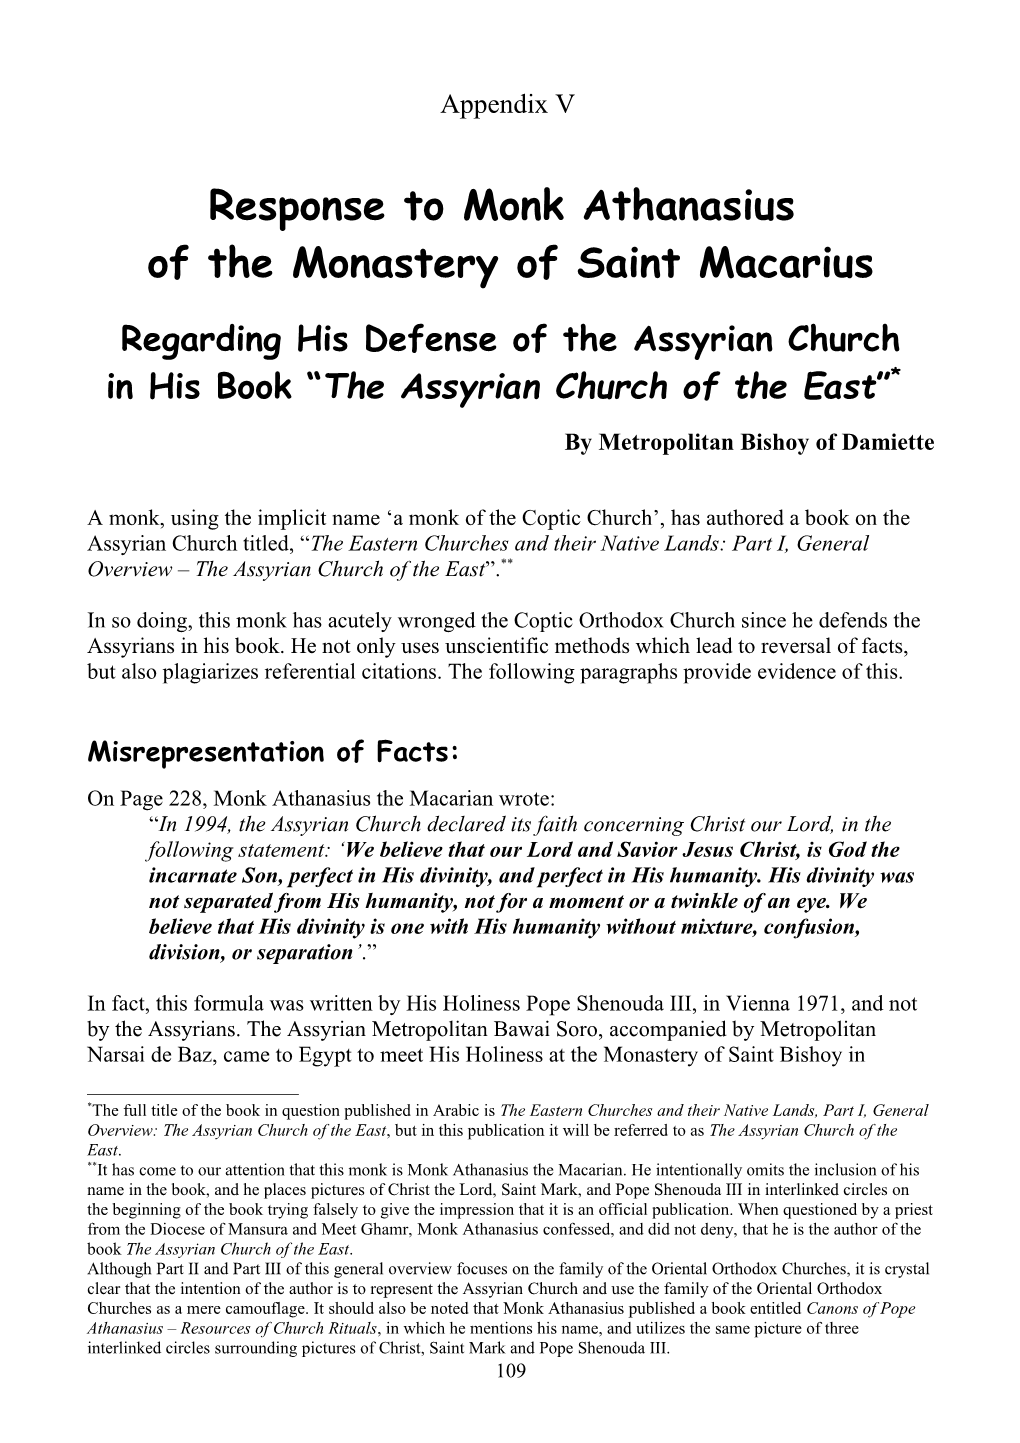 Of the Monastery of Saint Macarius